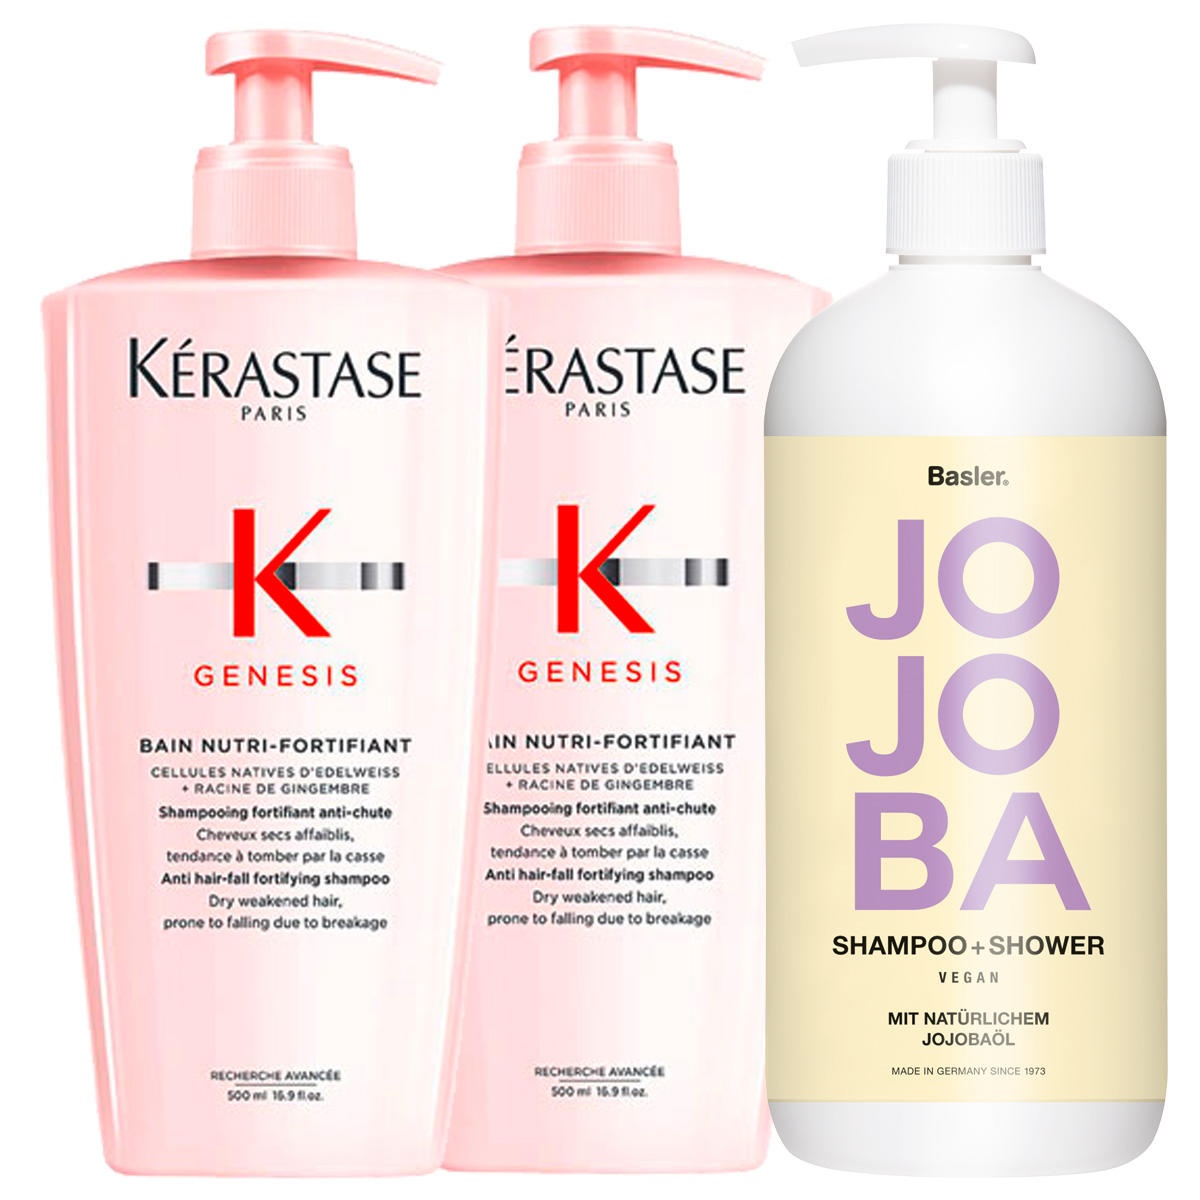 Kérastase Genesis Bain Nutri-Fortifiant Bundle 2 x 500 ml + Basler Jojoba Shampoo & Shower 500 ml gratis